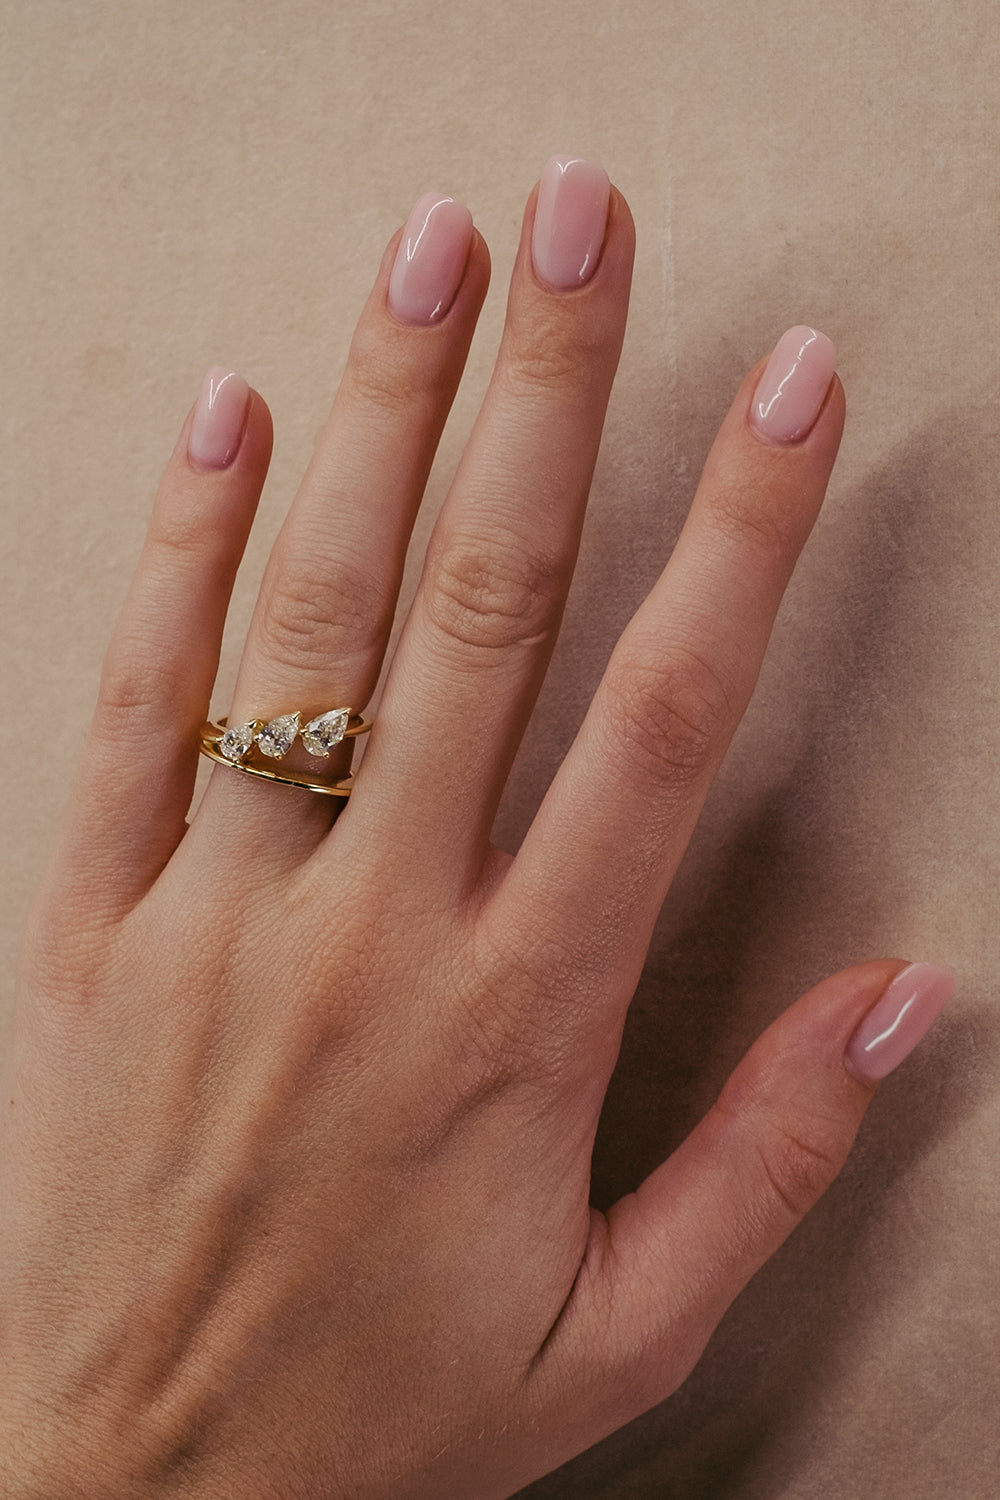 Triple Pear Diamond Ring | 18K Yellow Gold| Natasha Schweitzer